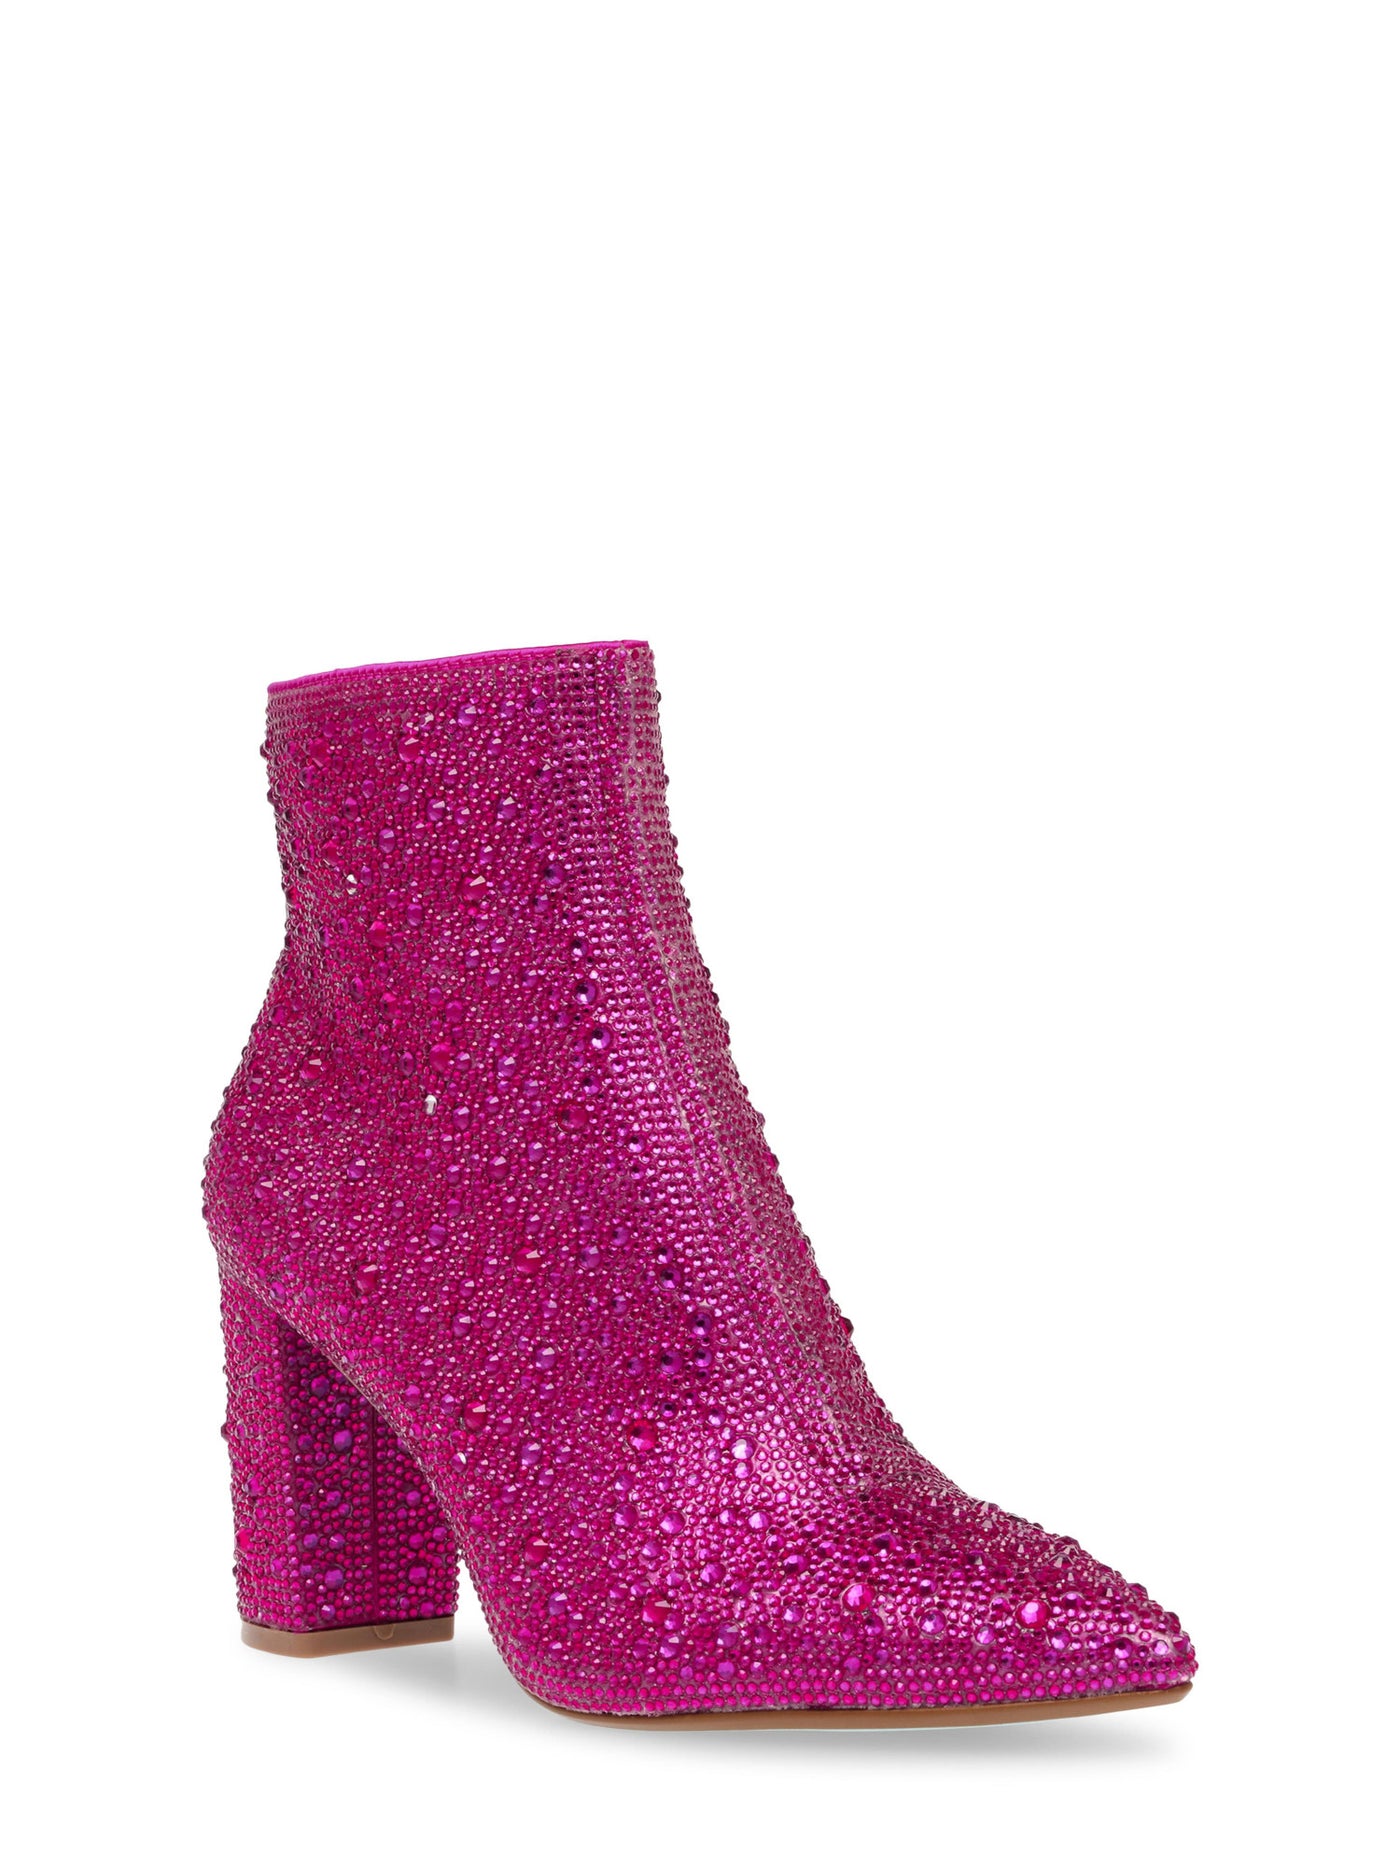 BETSEY JOHNSON Womens Pink Padded Rhinestone Embellished Cady Pointed Toe Block Heel Zip-Up Dress Booties 5 M